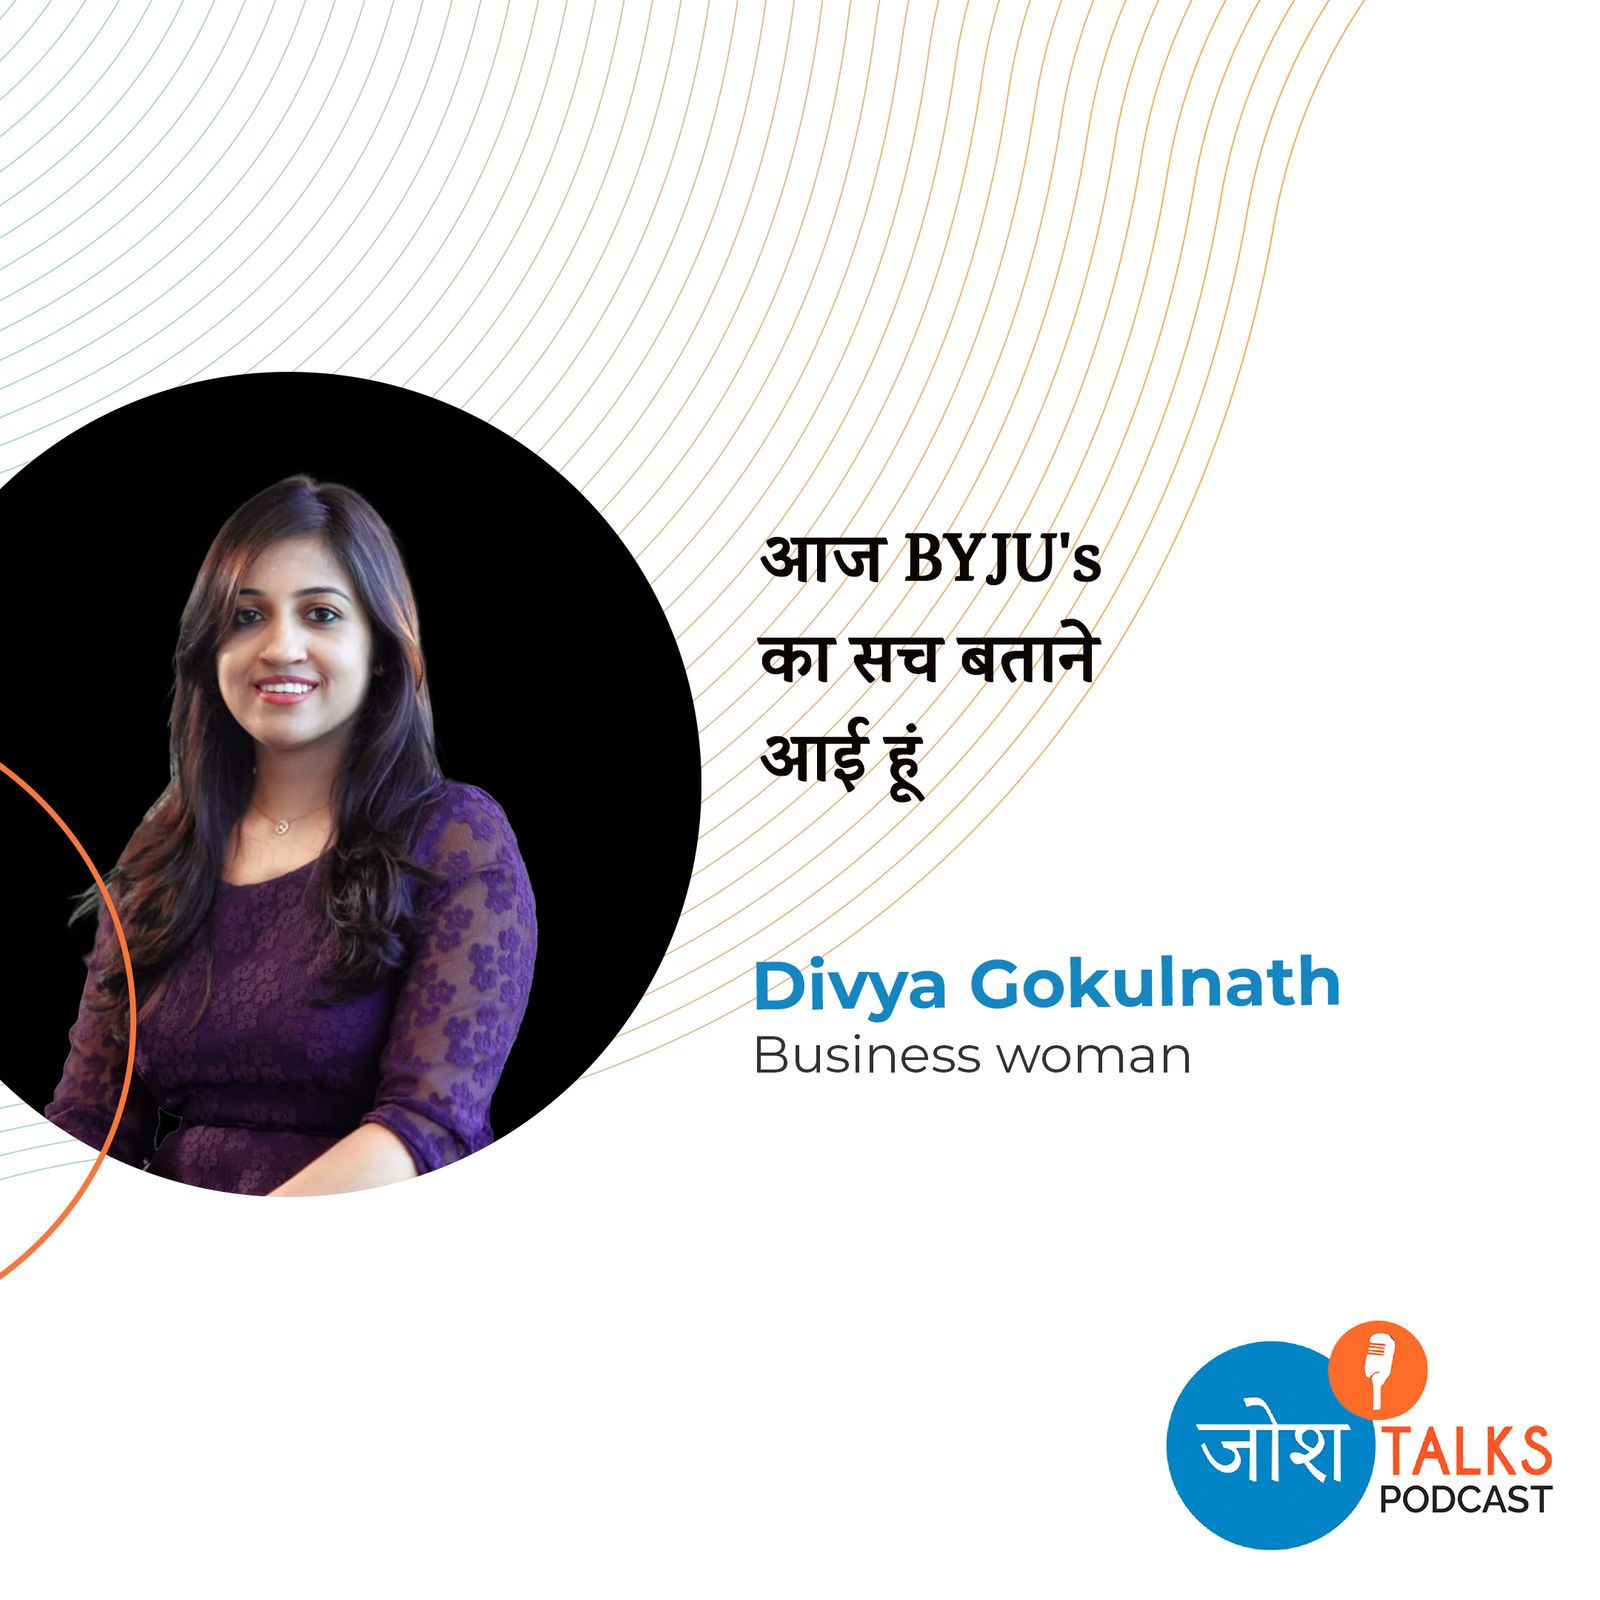 Co-Founder Divya Gokulnath से जानो कैसे BYJU's बनी $22 Billion की कंपनी